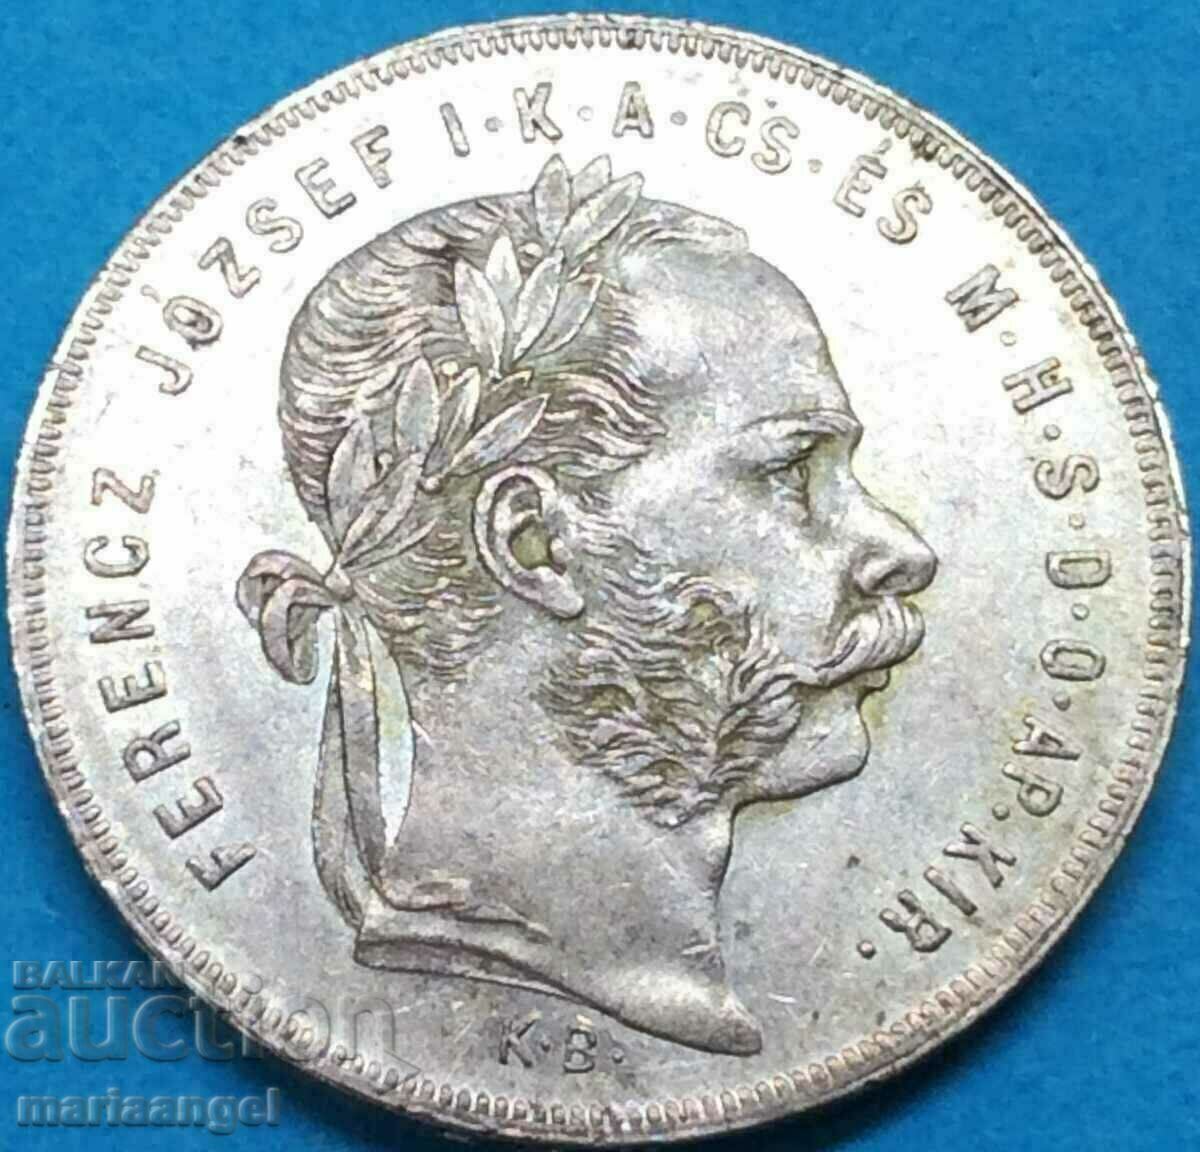 Ungaria 1 forint 1876 argint - an rar